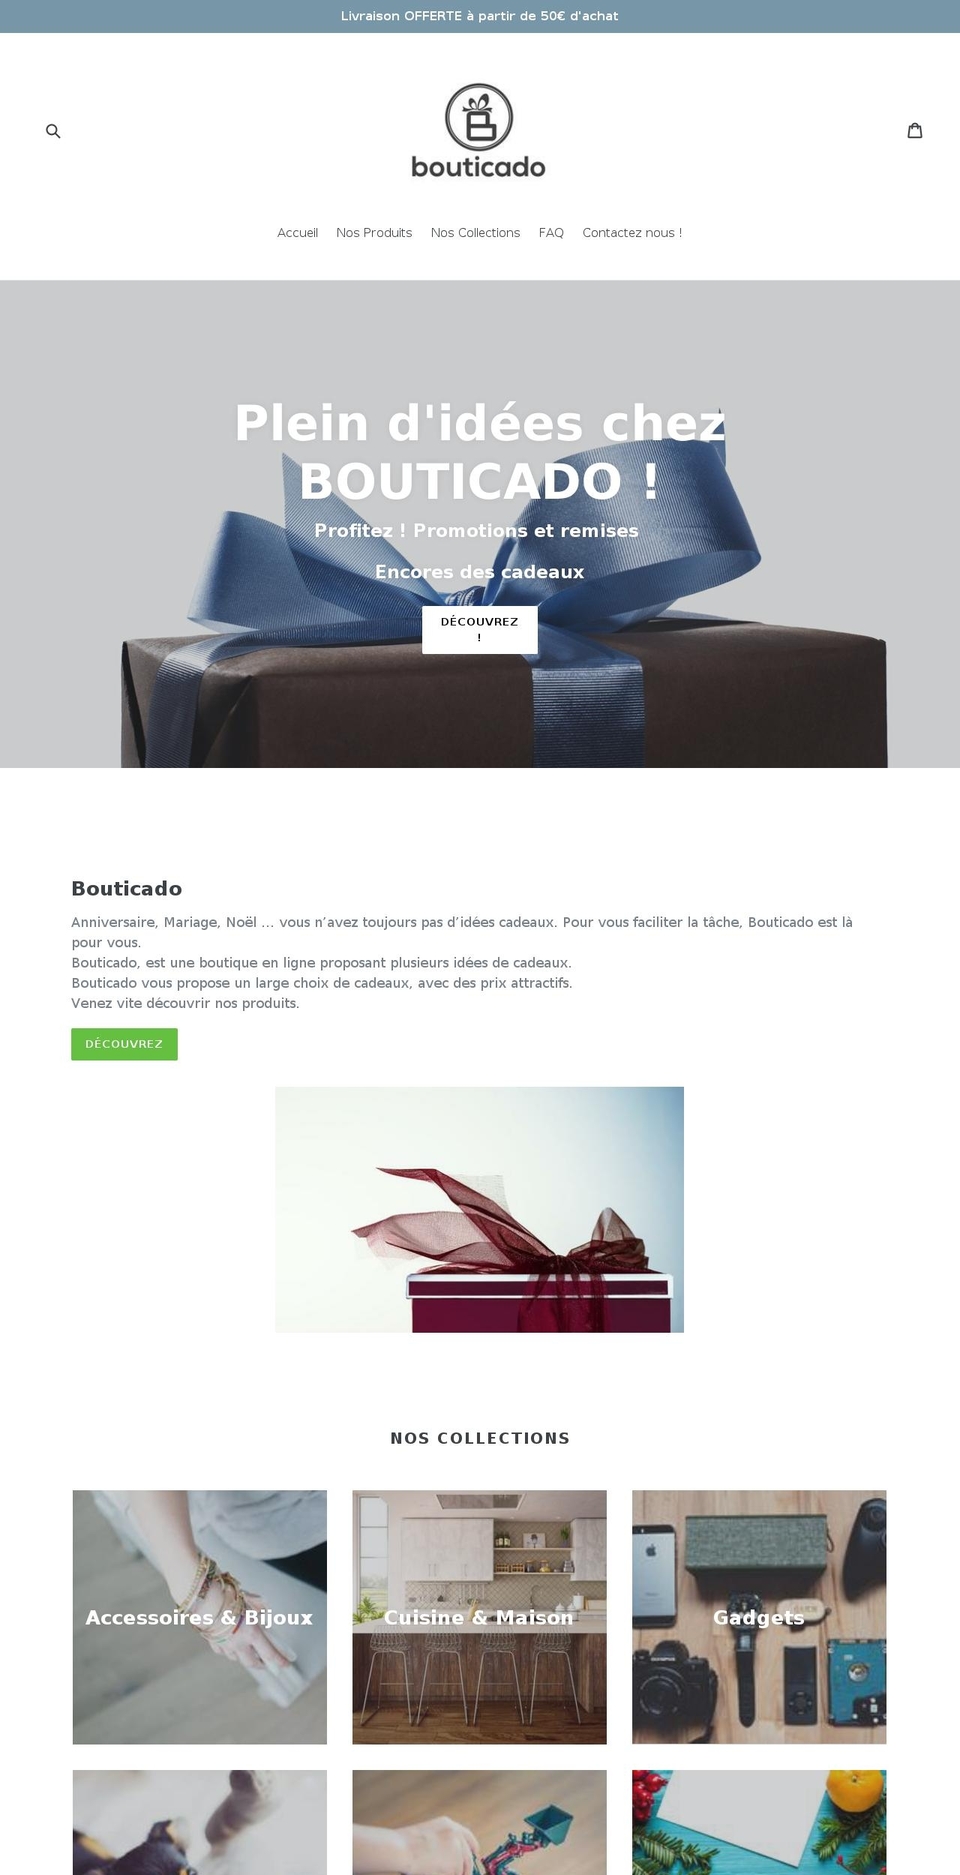 Copy of Debut Shopify theme site example bouticado.com